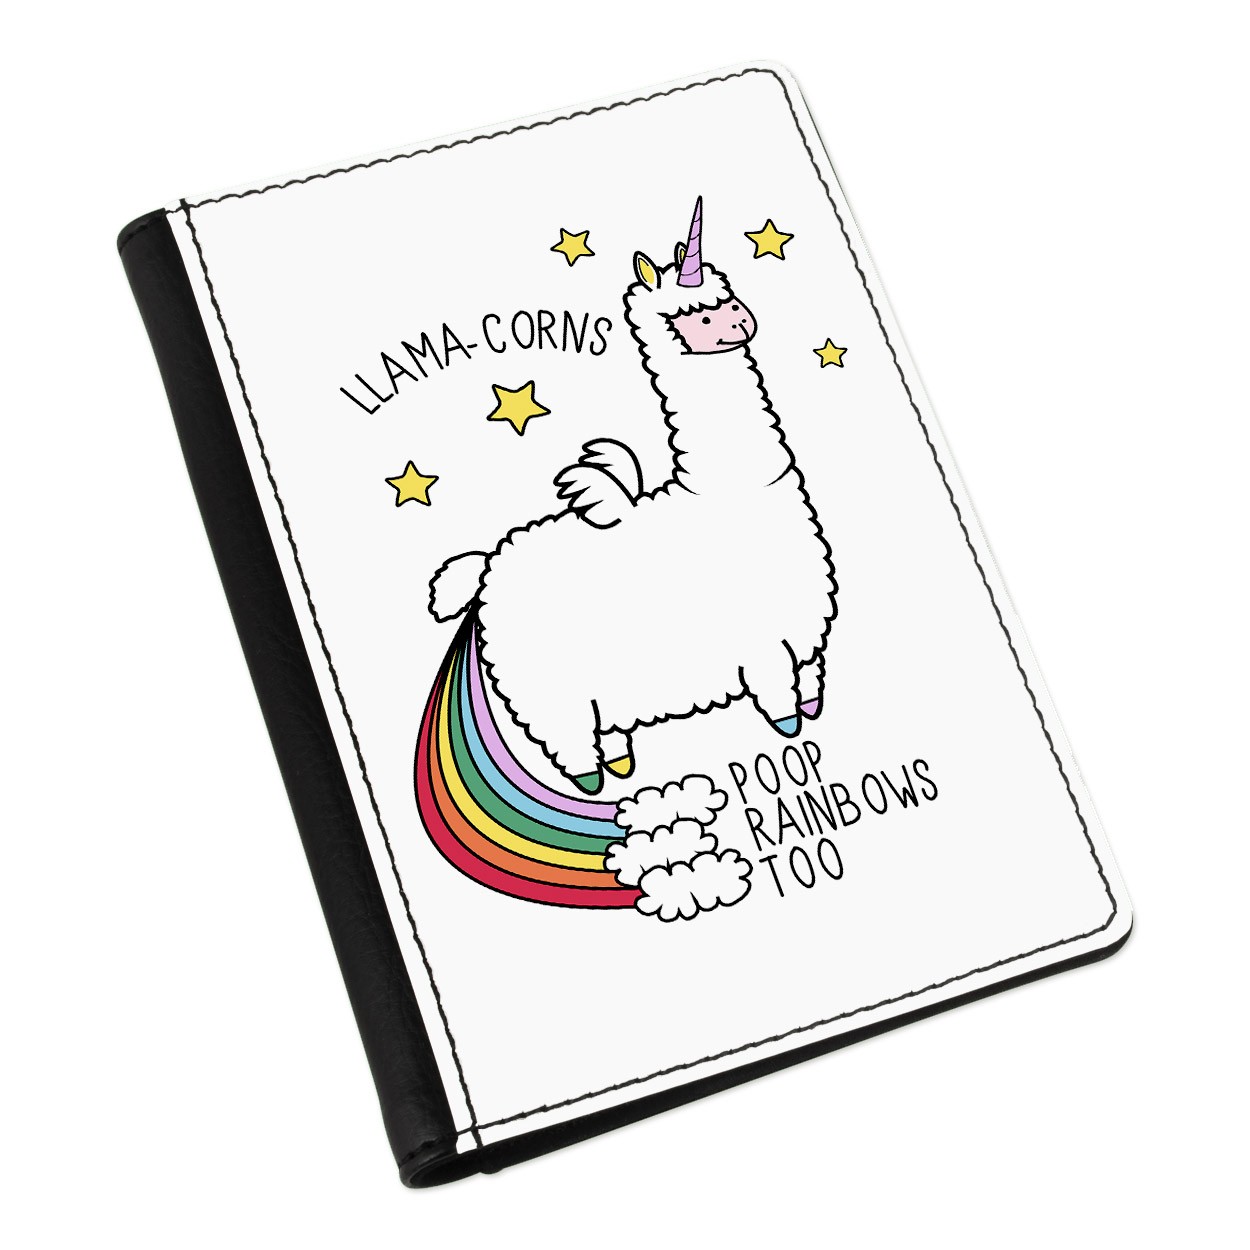 Llama-corns Poop Rainbows Too Passport Holder Cover